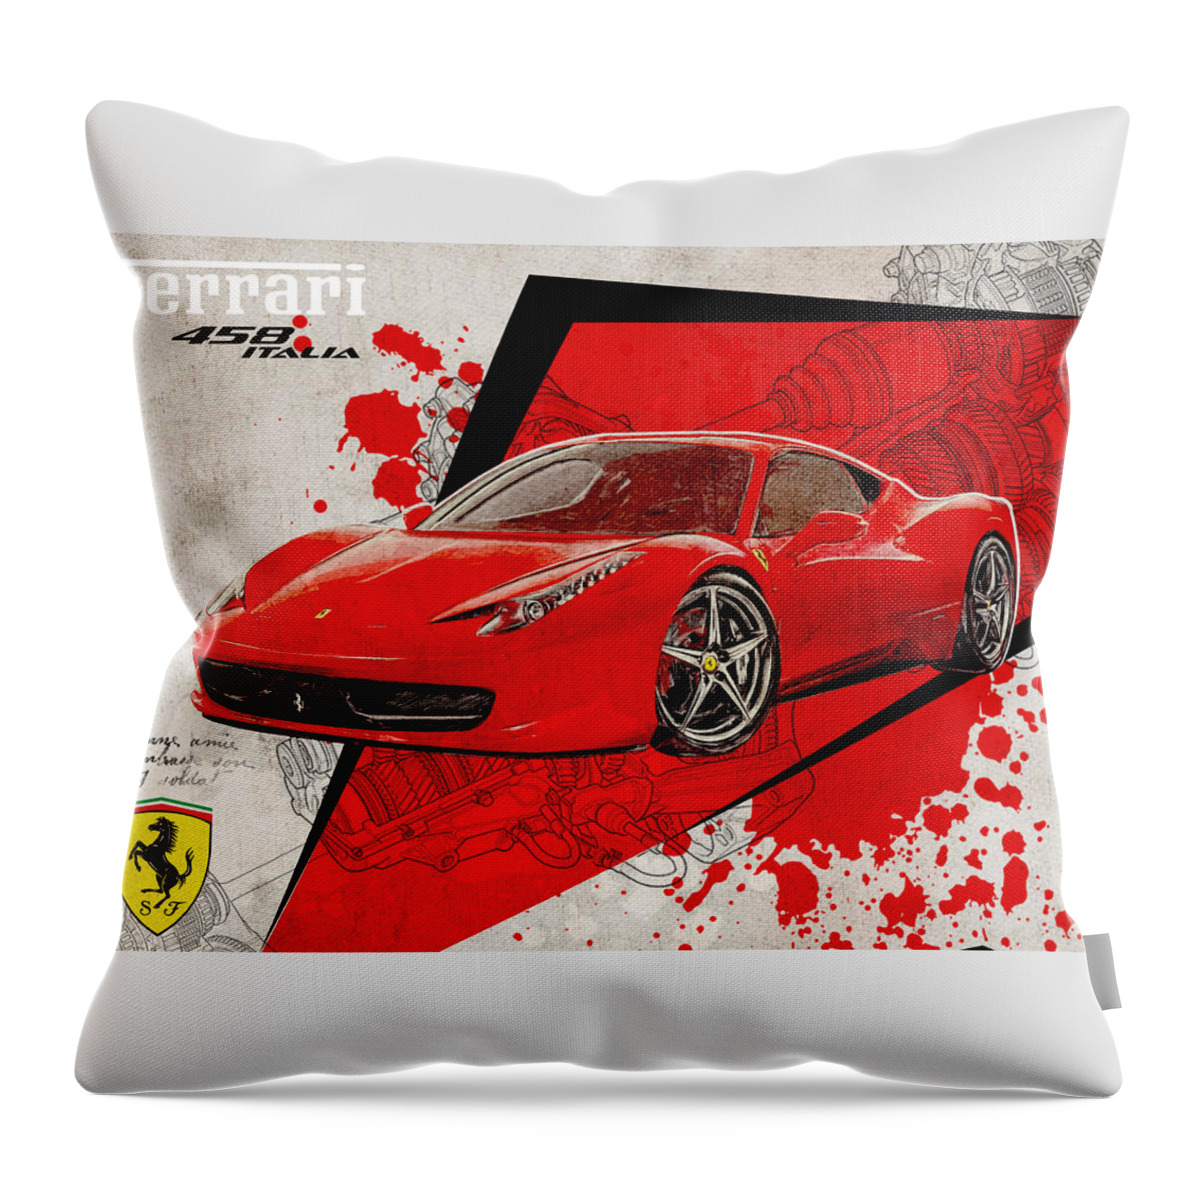 Ferrari Throw Pillow featuring the digital art Ferrari 458 Italia by Yurdaer Bes